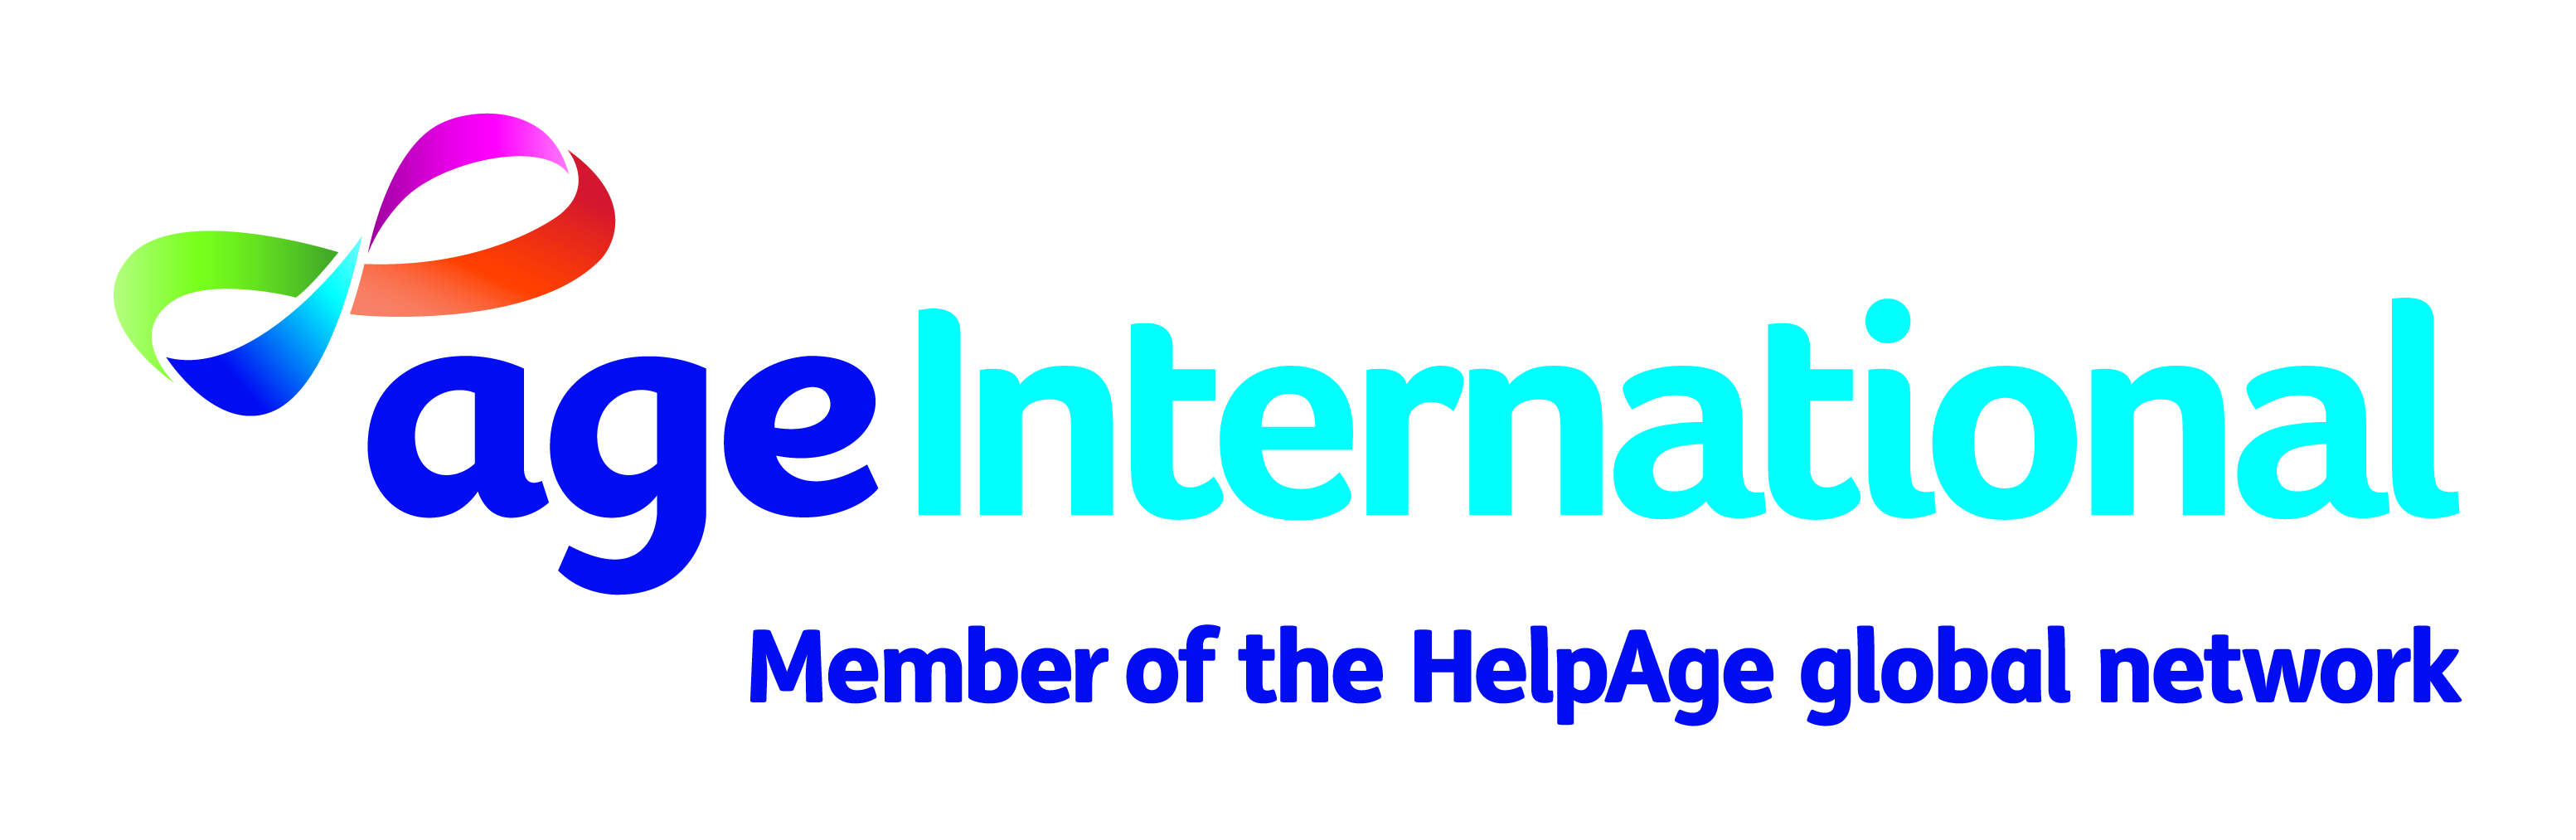 Age Int Global Network Logo Strap_Colour_CMYK.JPG